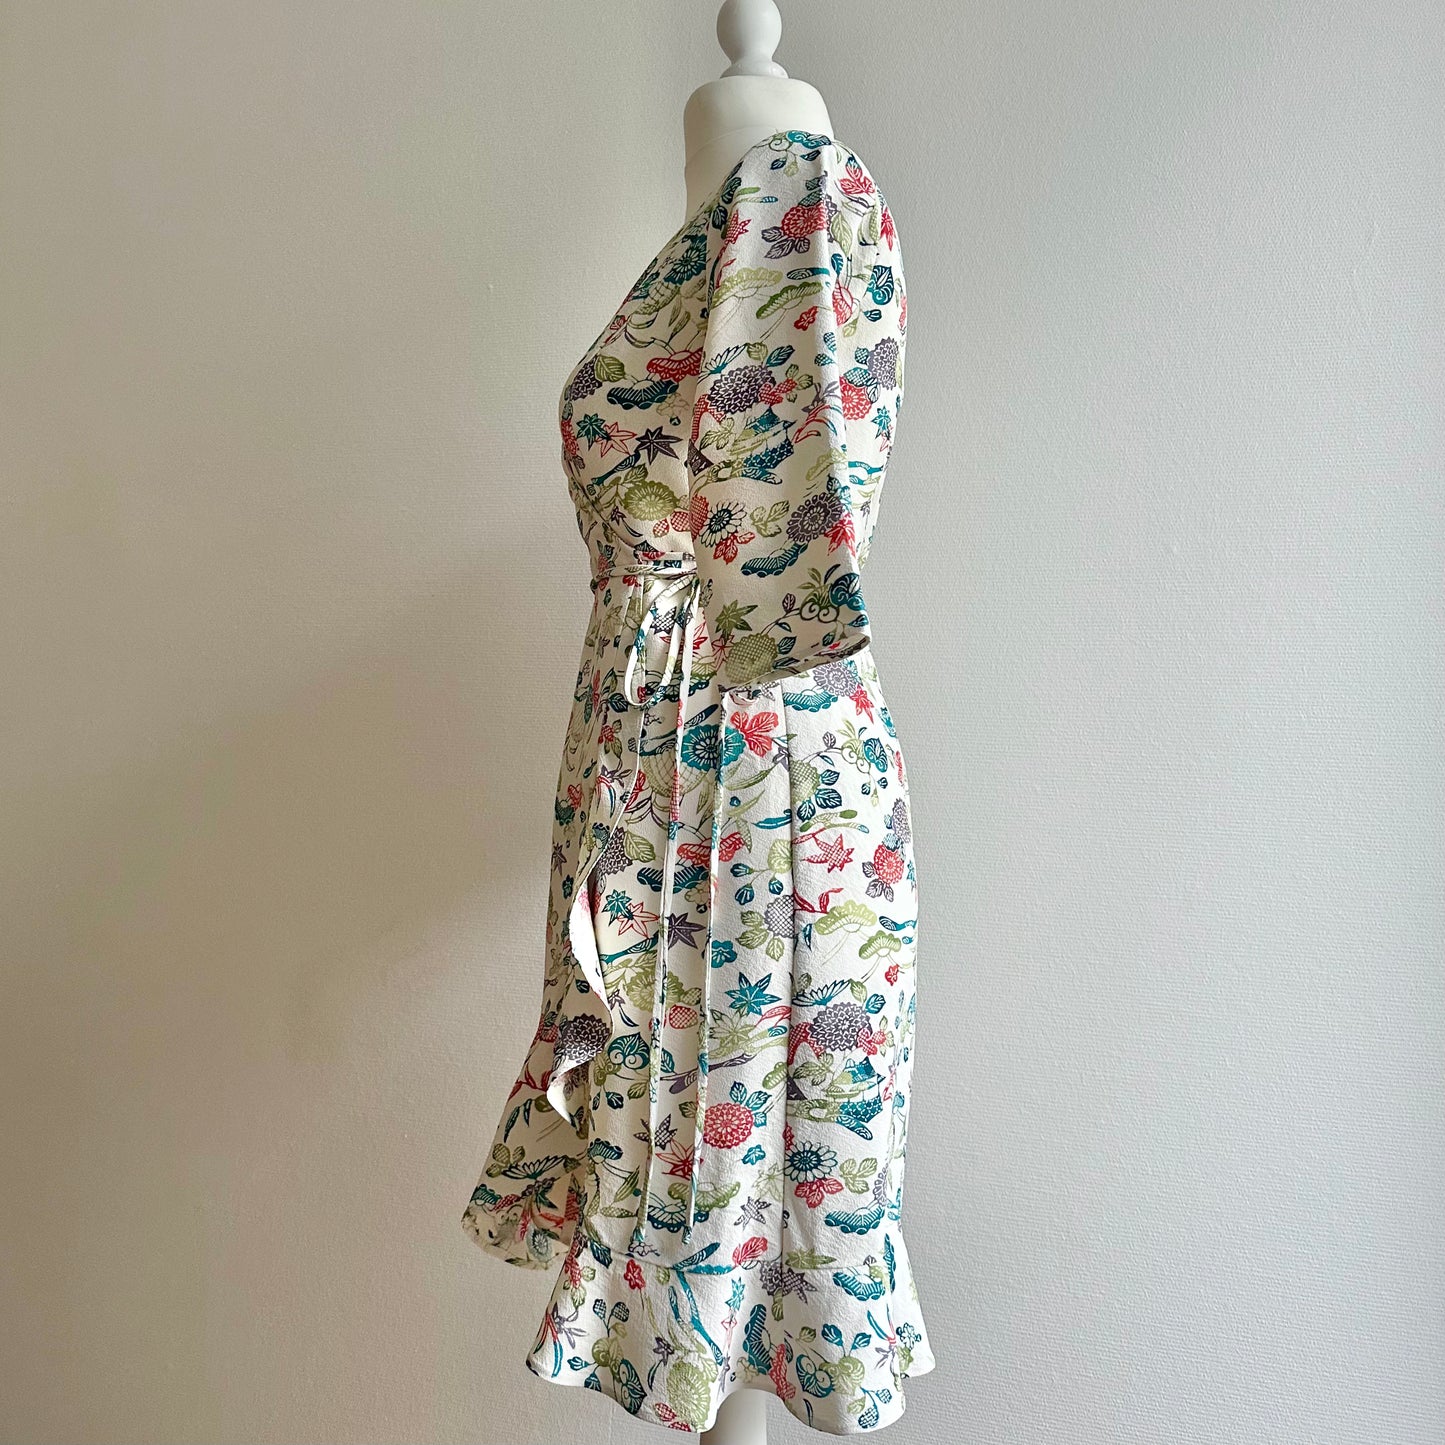 Silk Kimono wrap dress, Komon 小紋, three quater sleeves, Handcrafted, Upcycled, #pre5